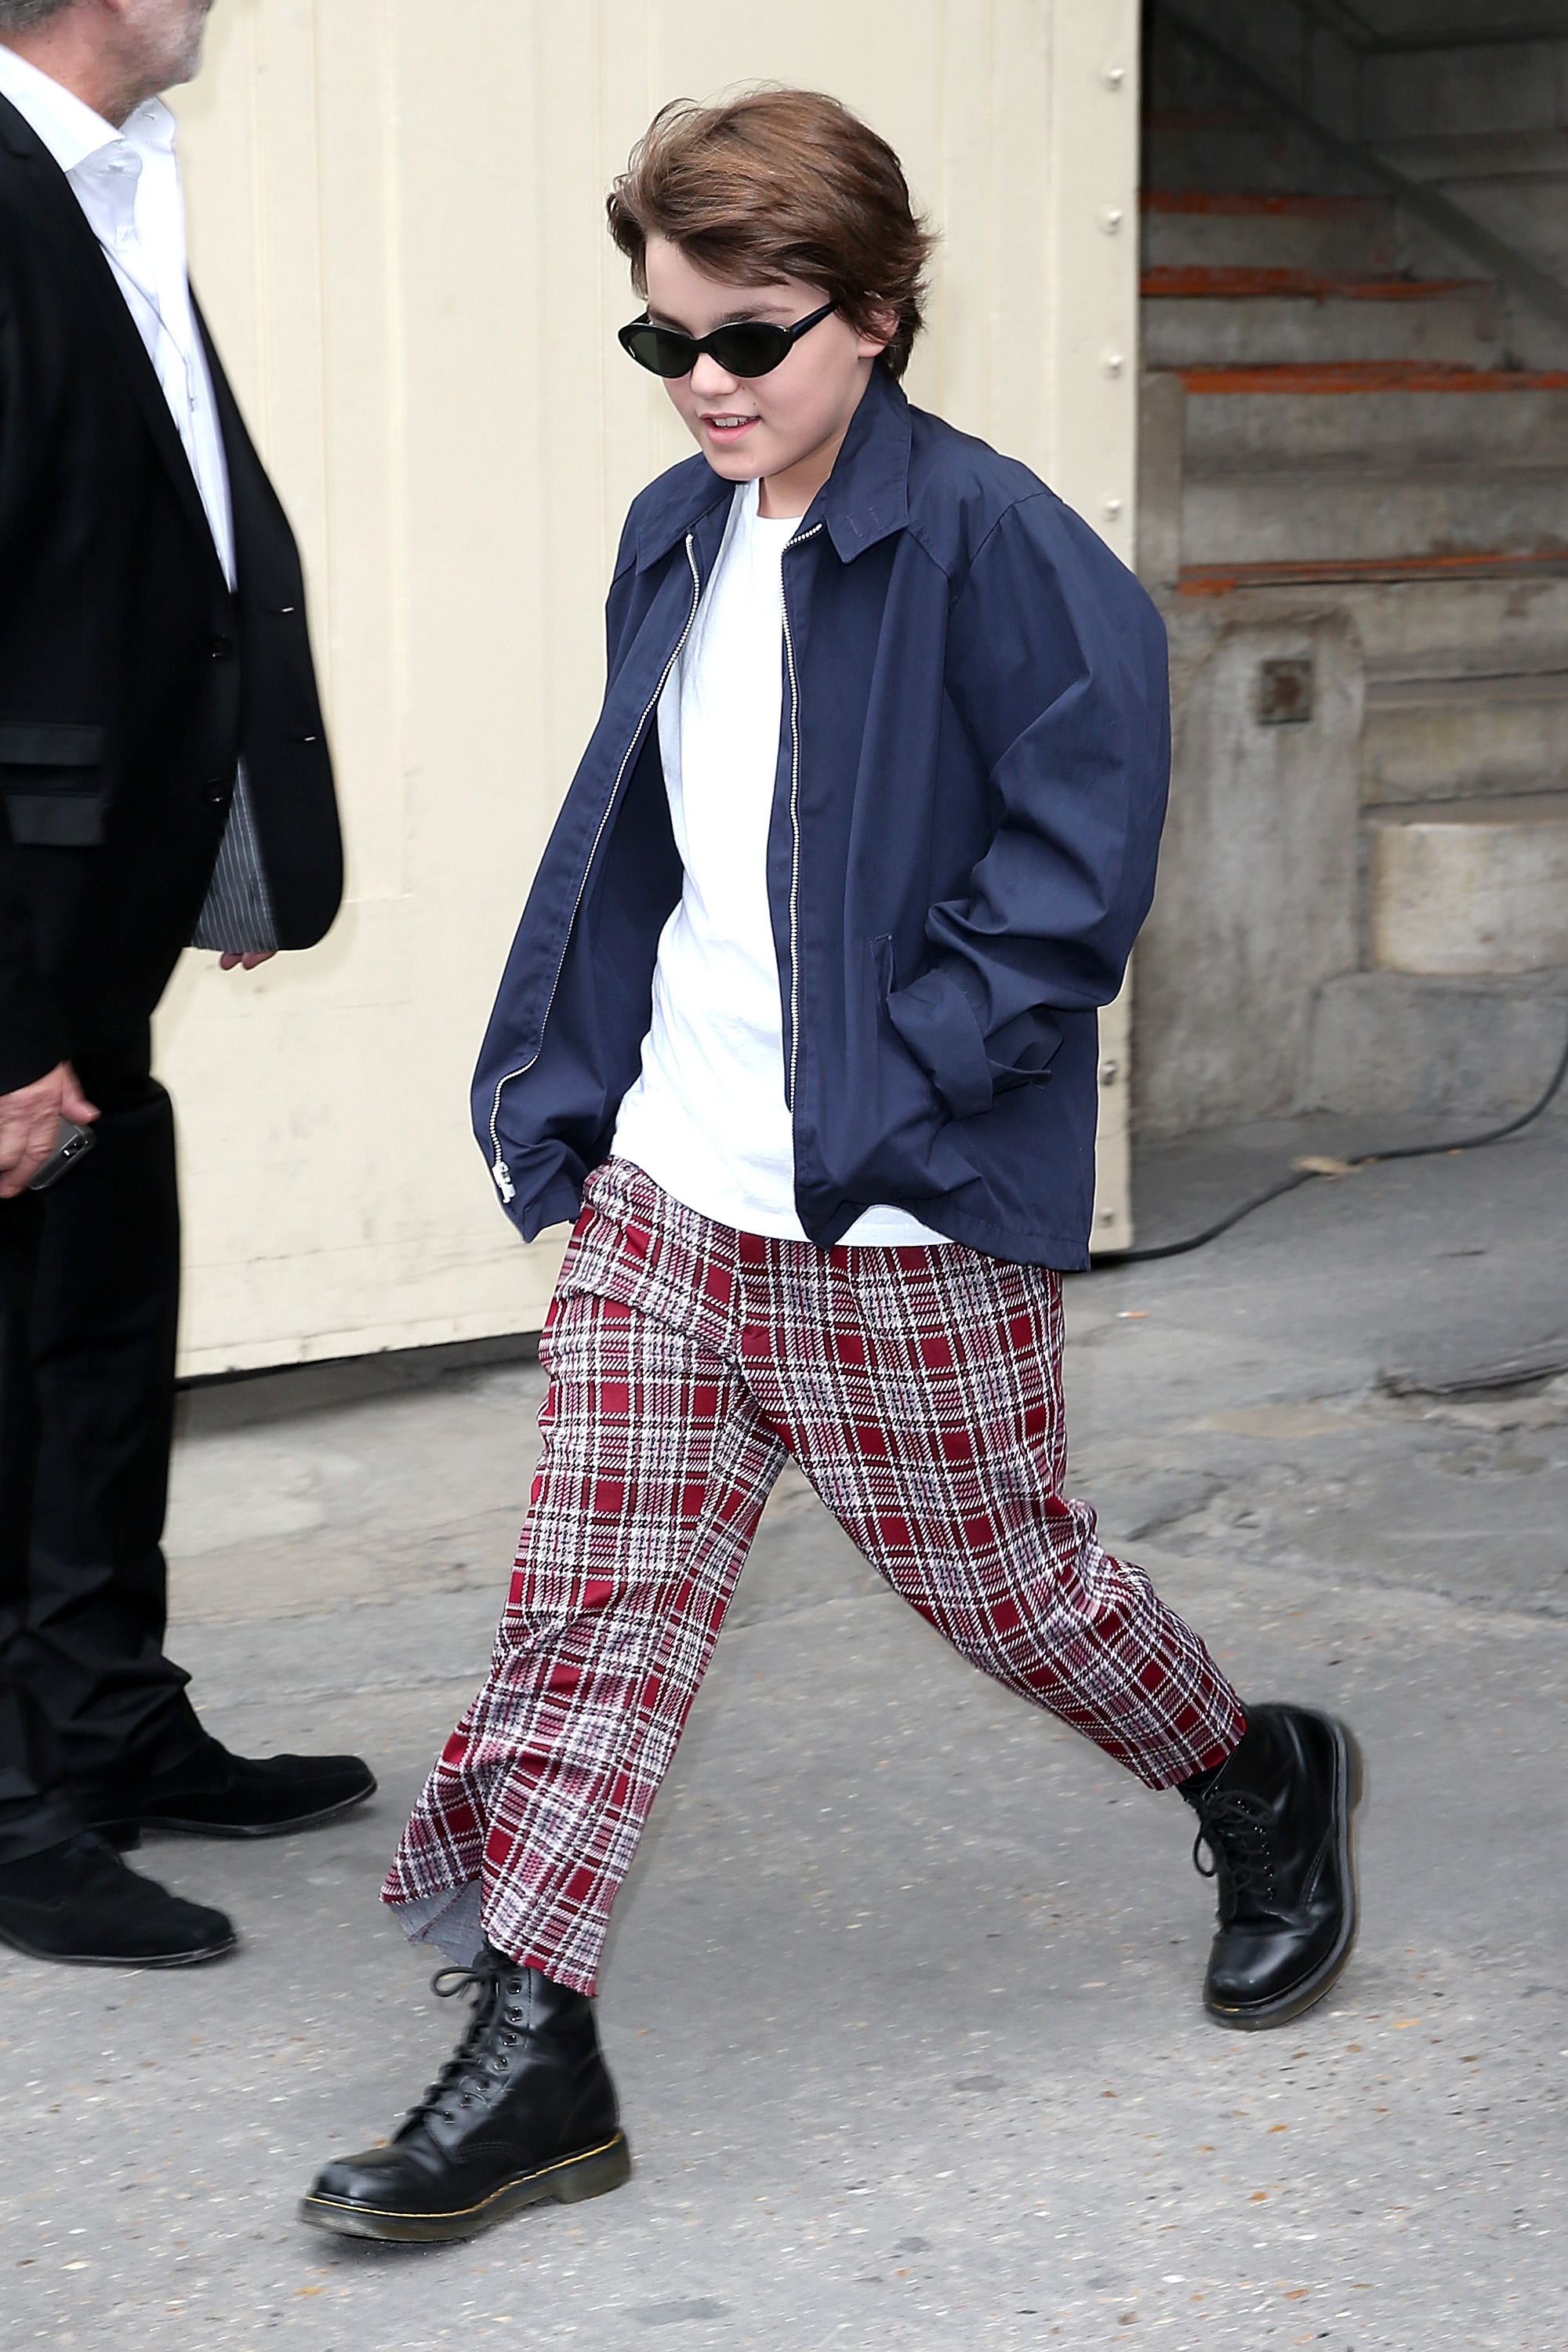 Jack Depp at Paris Fashion Week in 2015 | Source: Getty Images